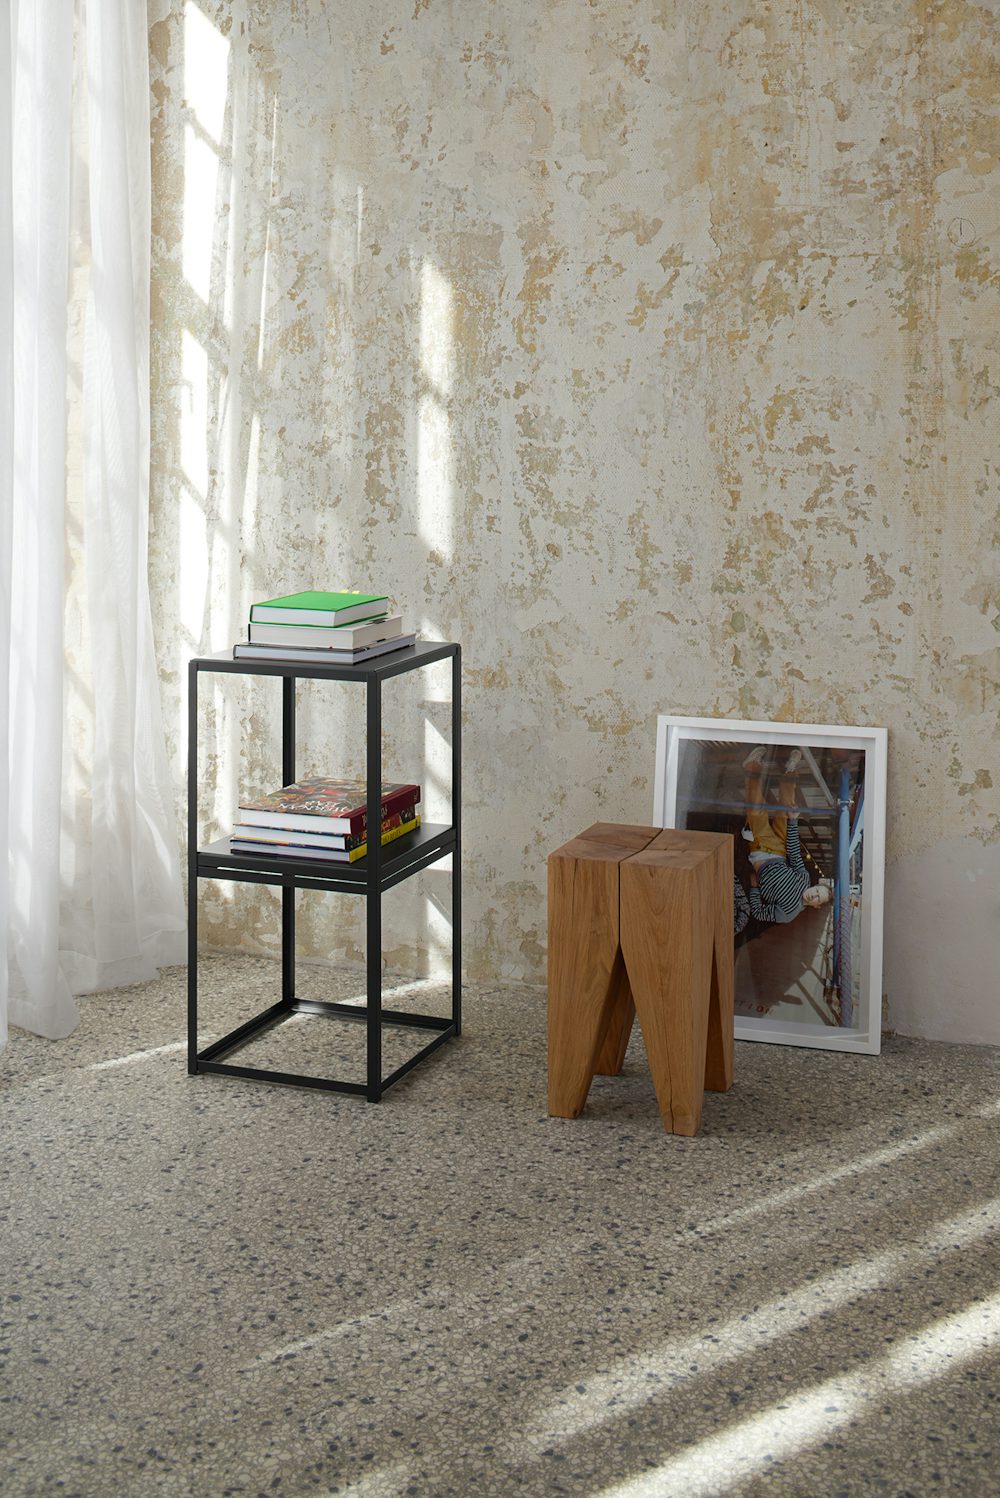 backenzahn stool by phillip mainzer for e15 furniture